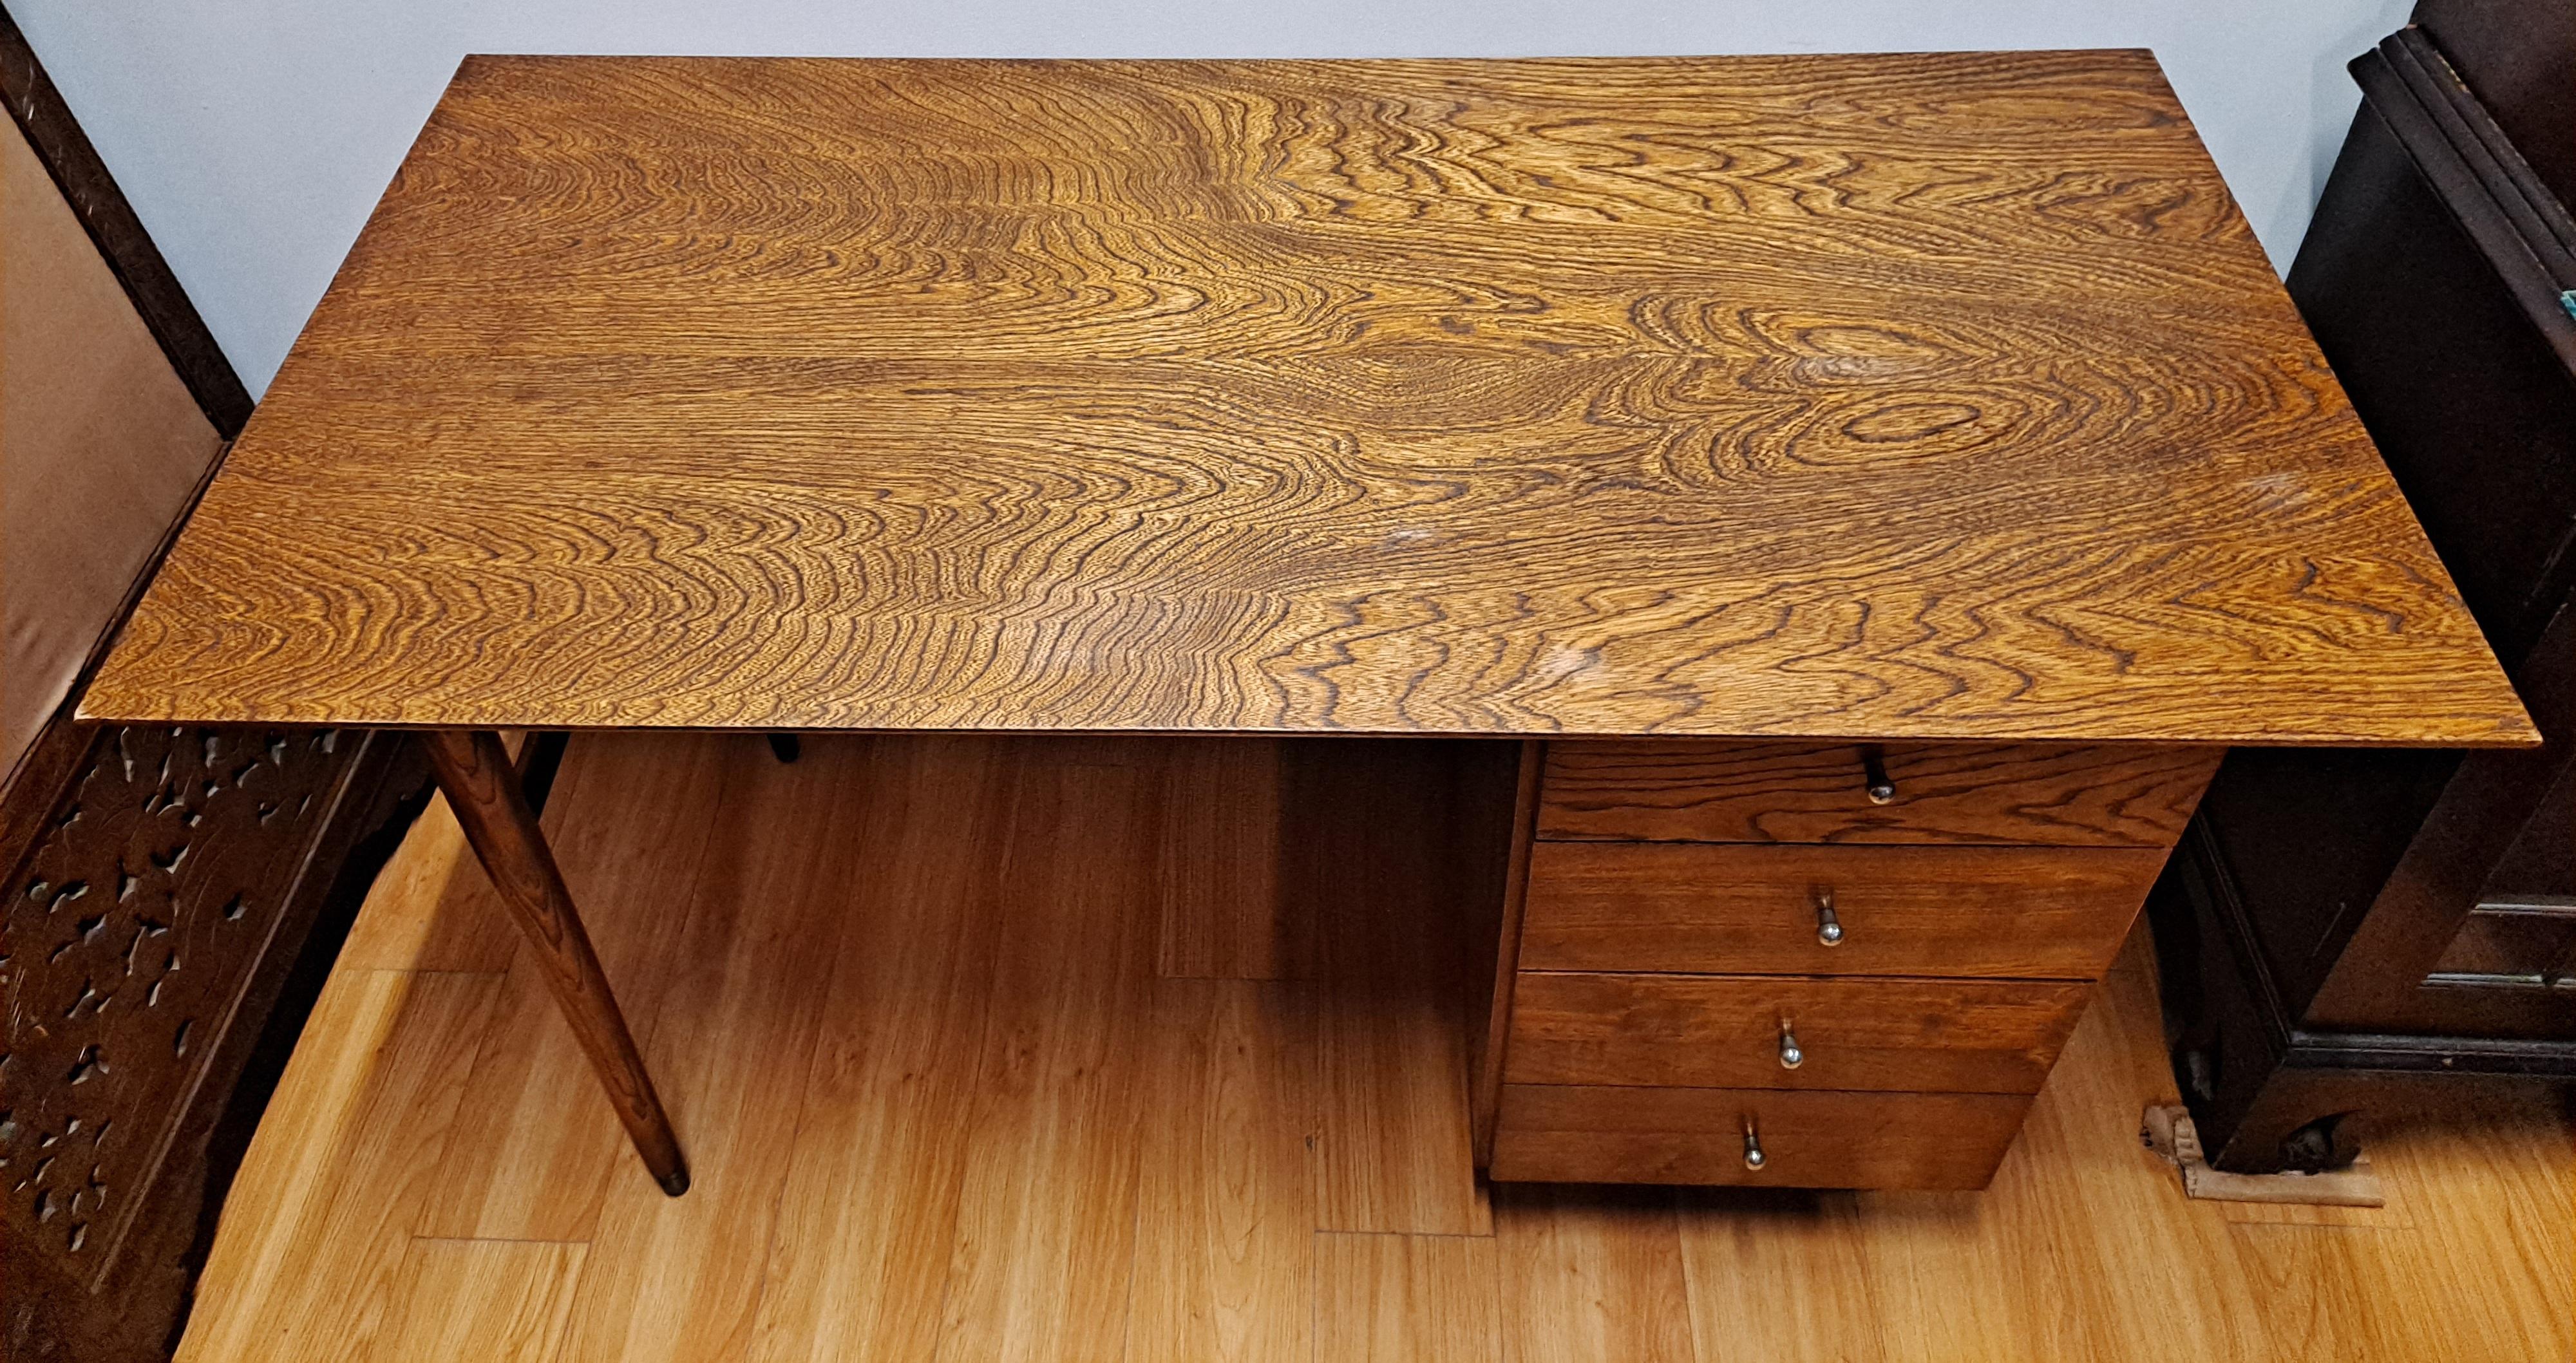 Classic Mid-Century Three Drawer Oak Desk

Beautiful grain top and brass feet

48 x 20 3.75 x 29